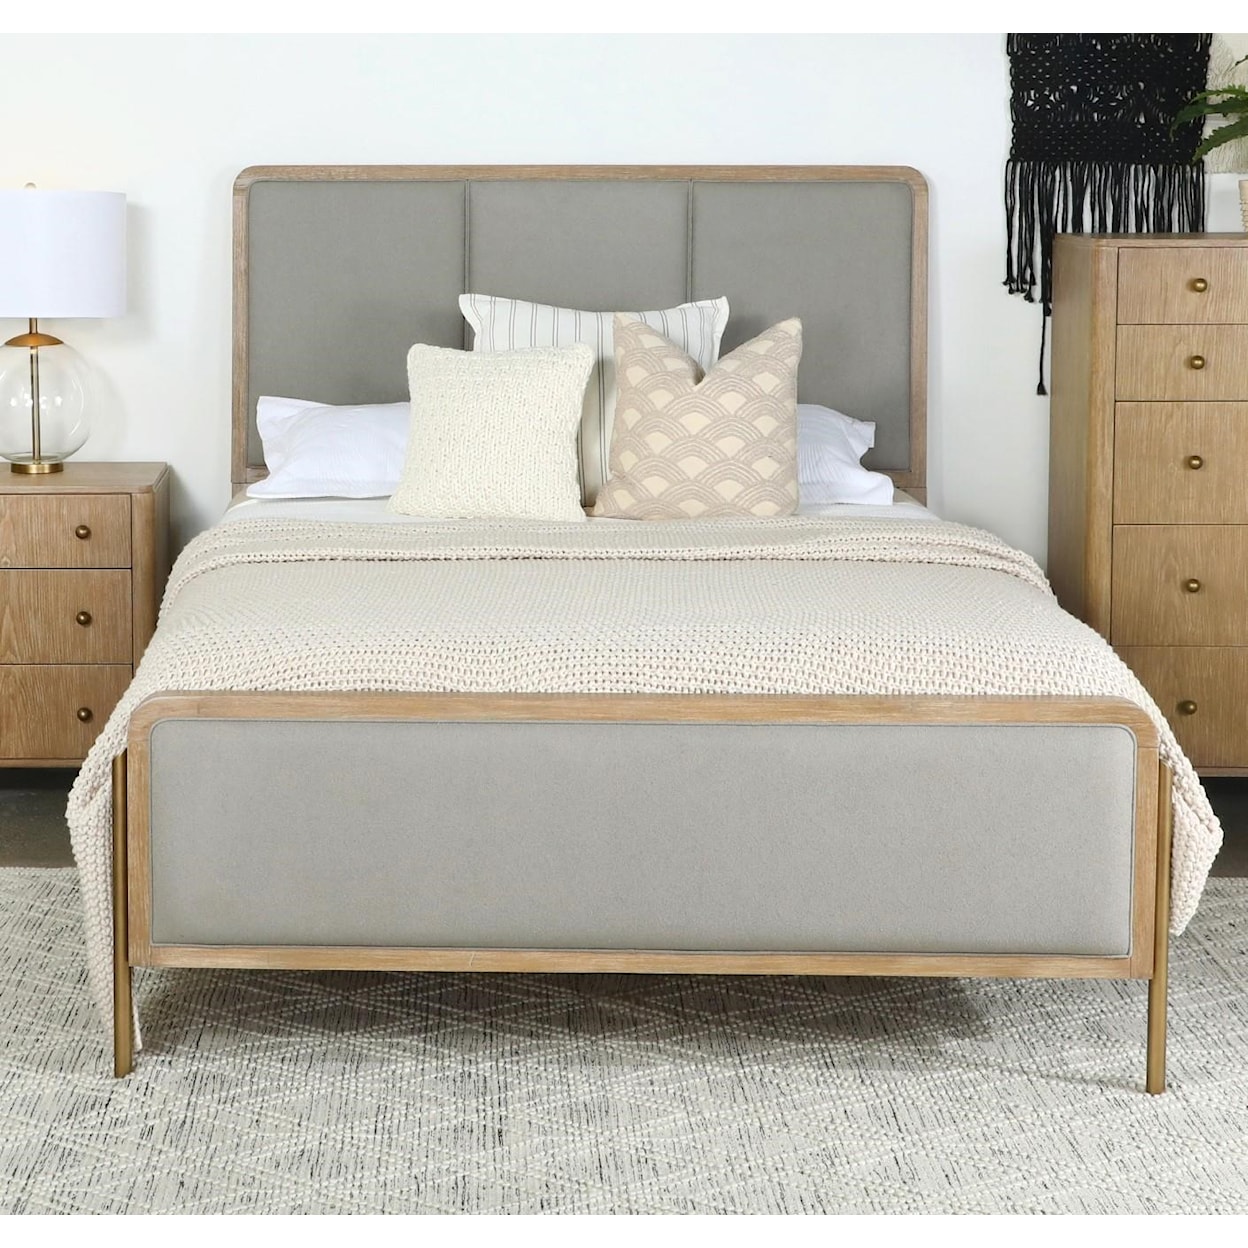 Coaster 22430 Queen Upholstered Bed